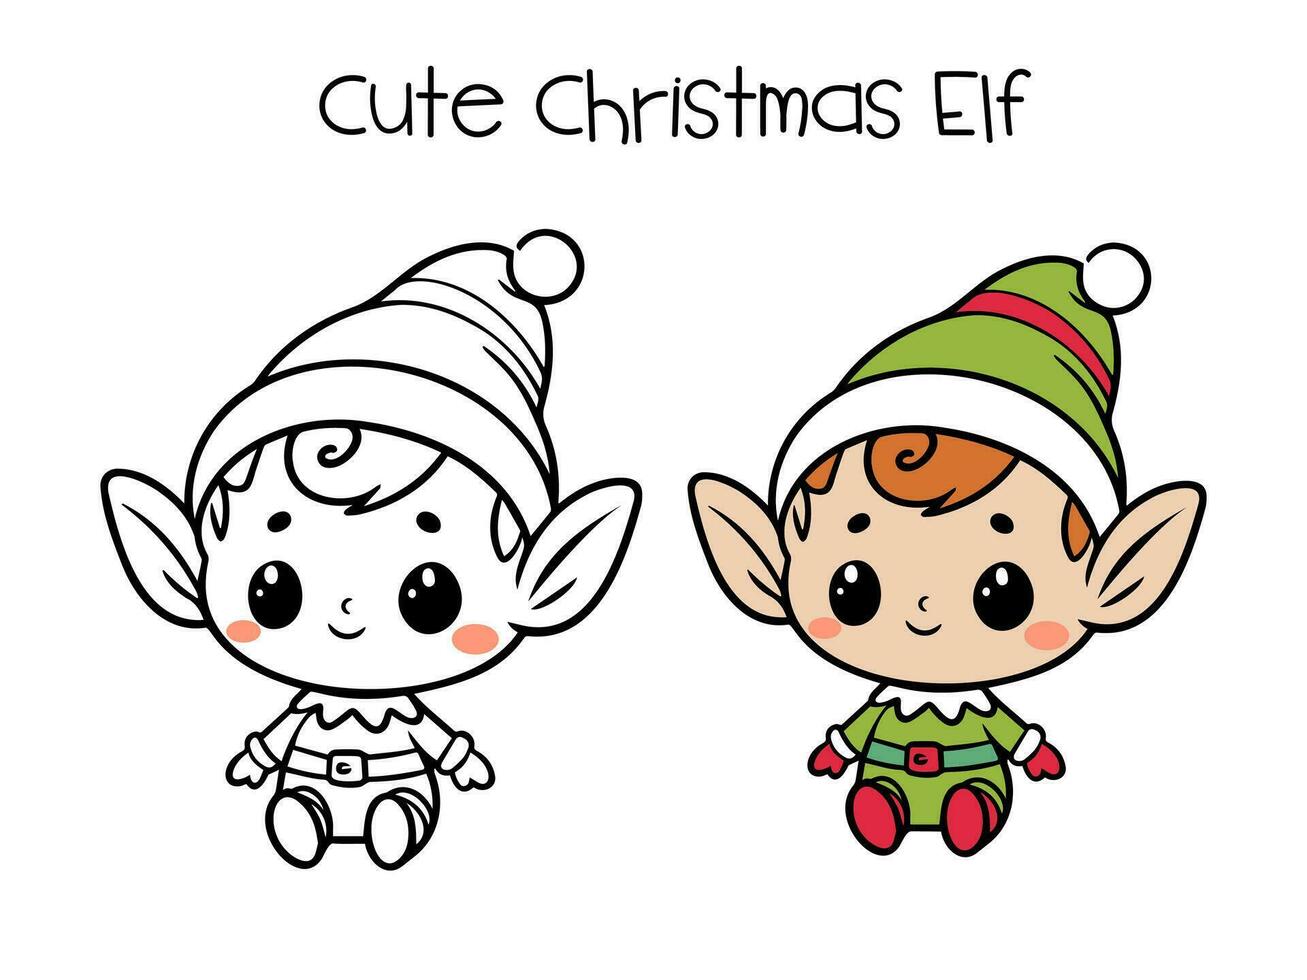 Cute Christmas elf, Santa helper. vector